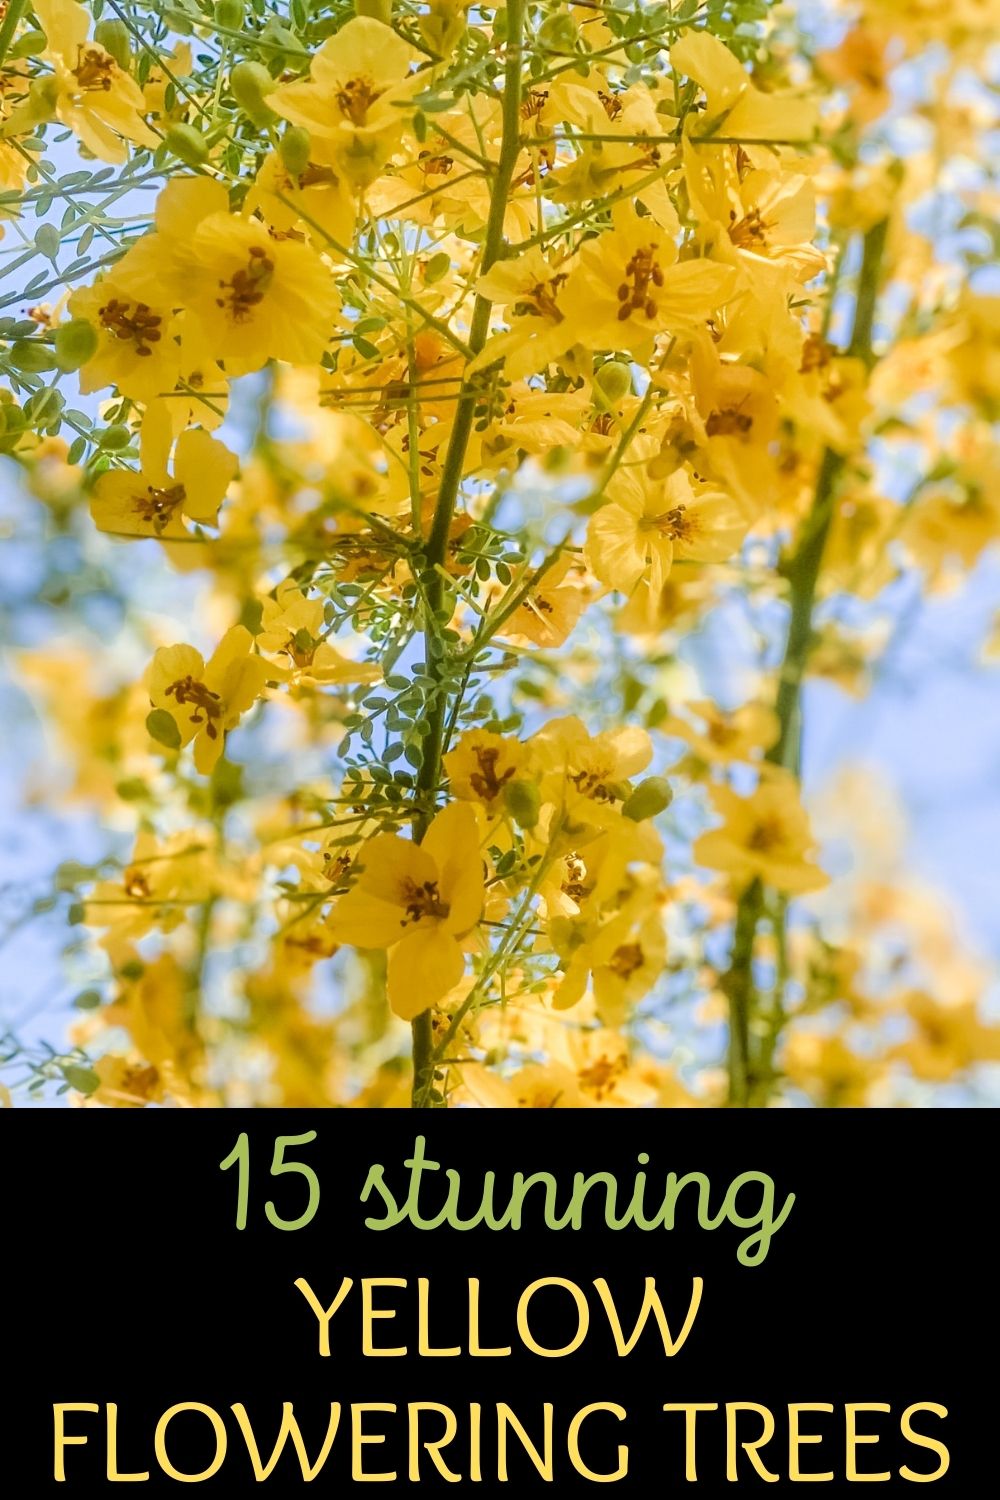 15 stunning yellow flowering trees